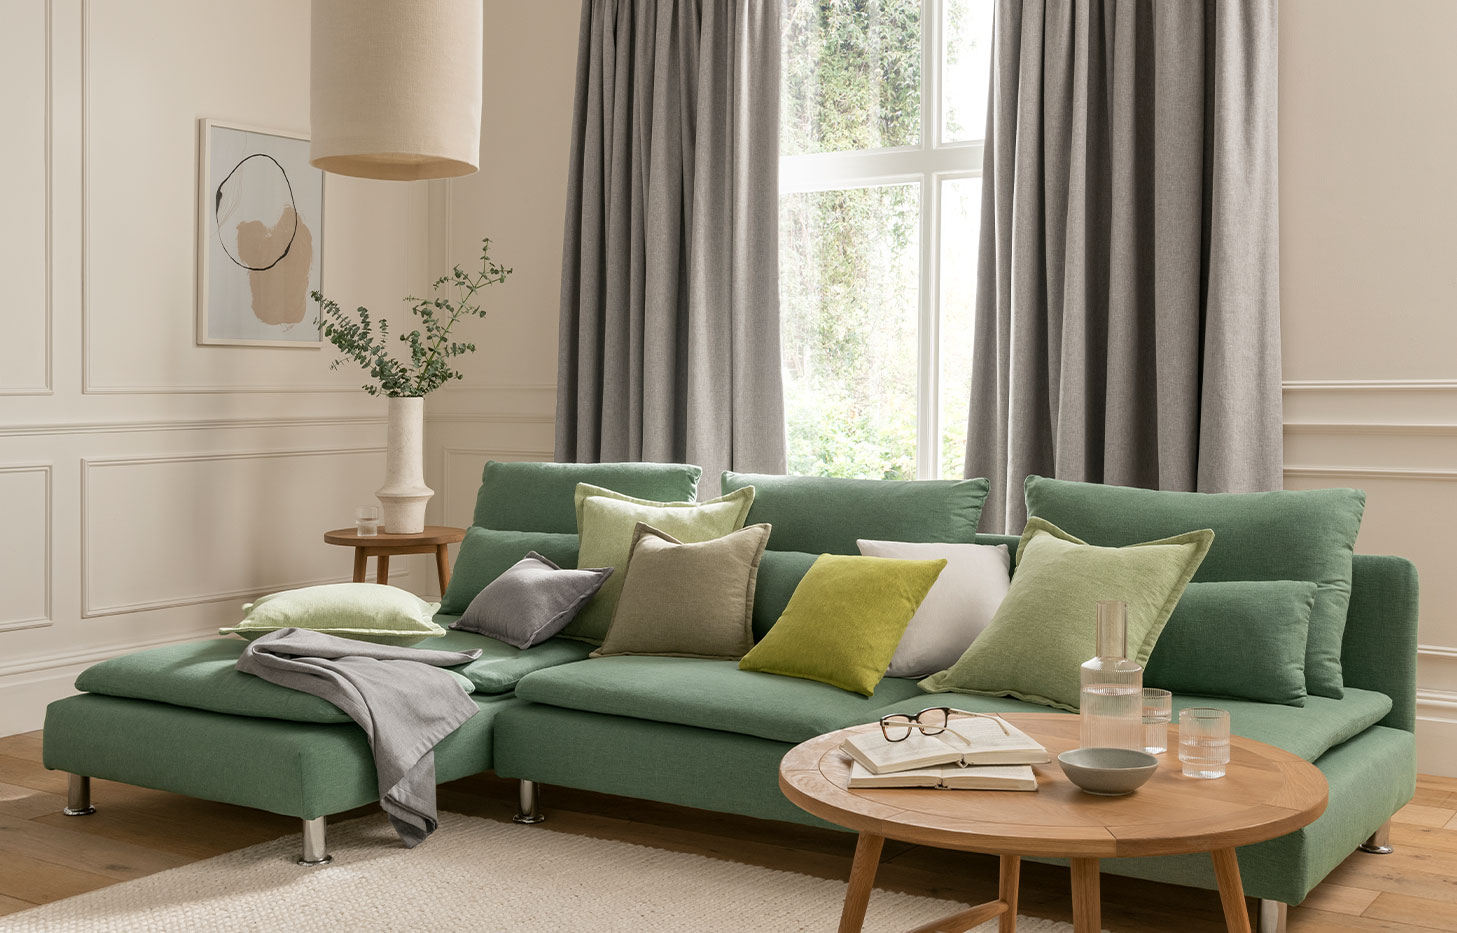 Orla fabrics as sofa, cushions and curtains